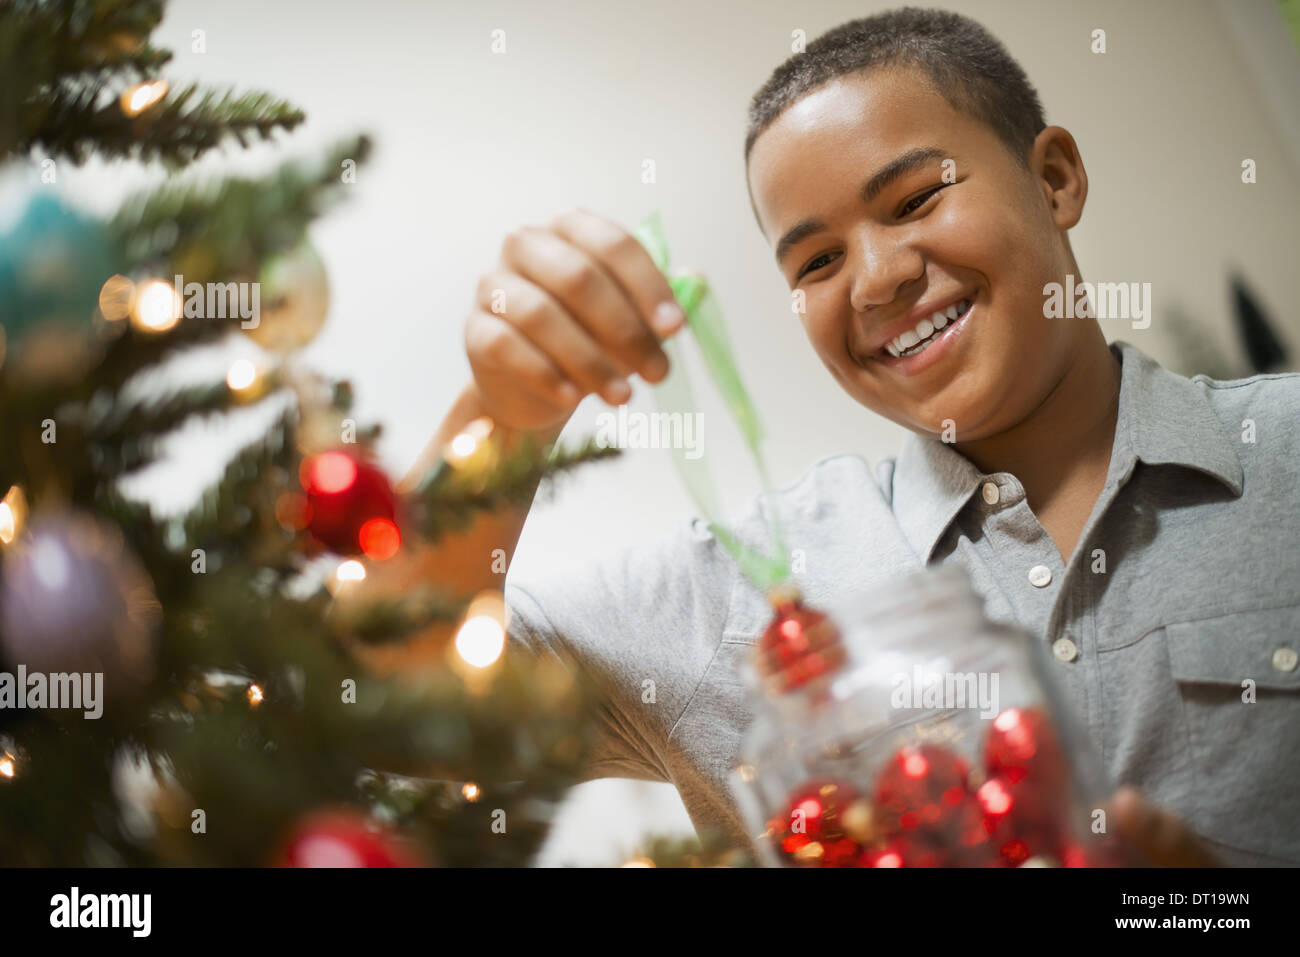 Woodstock New York USA boy placing Christmas ornaments on tree Stock Photo